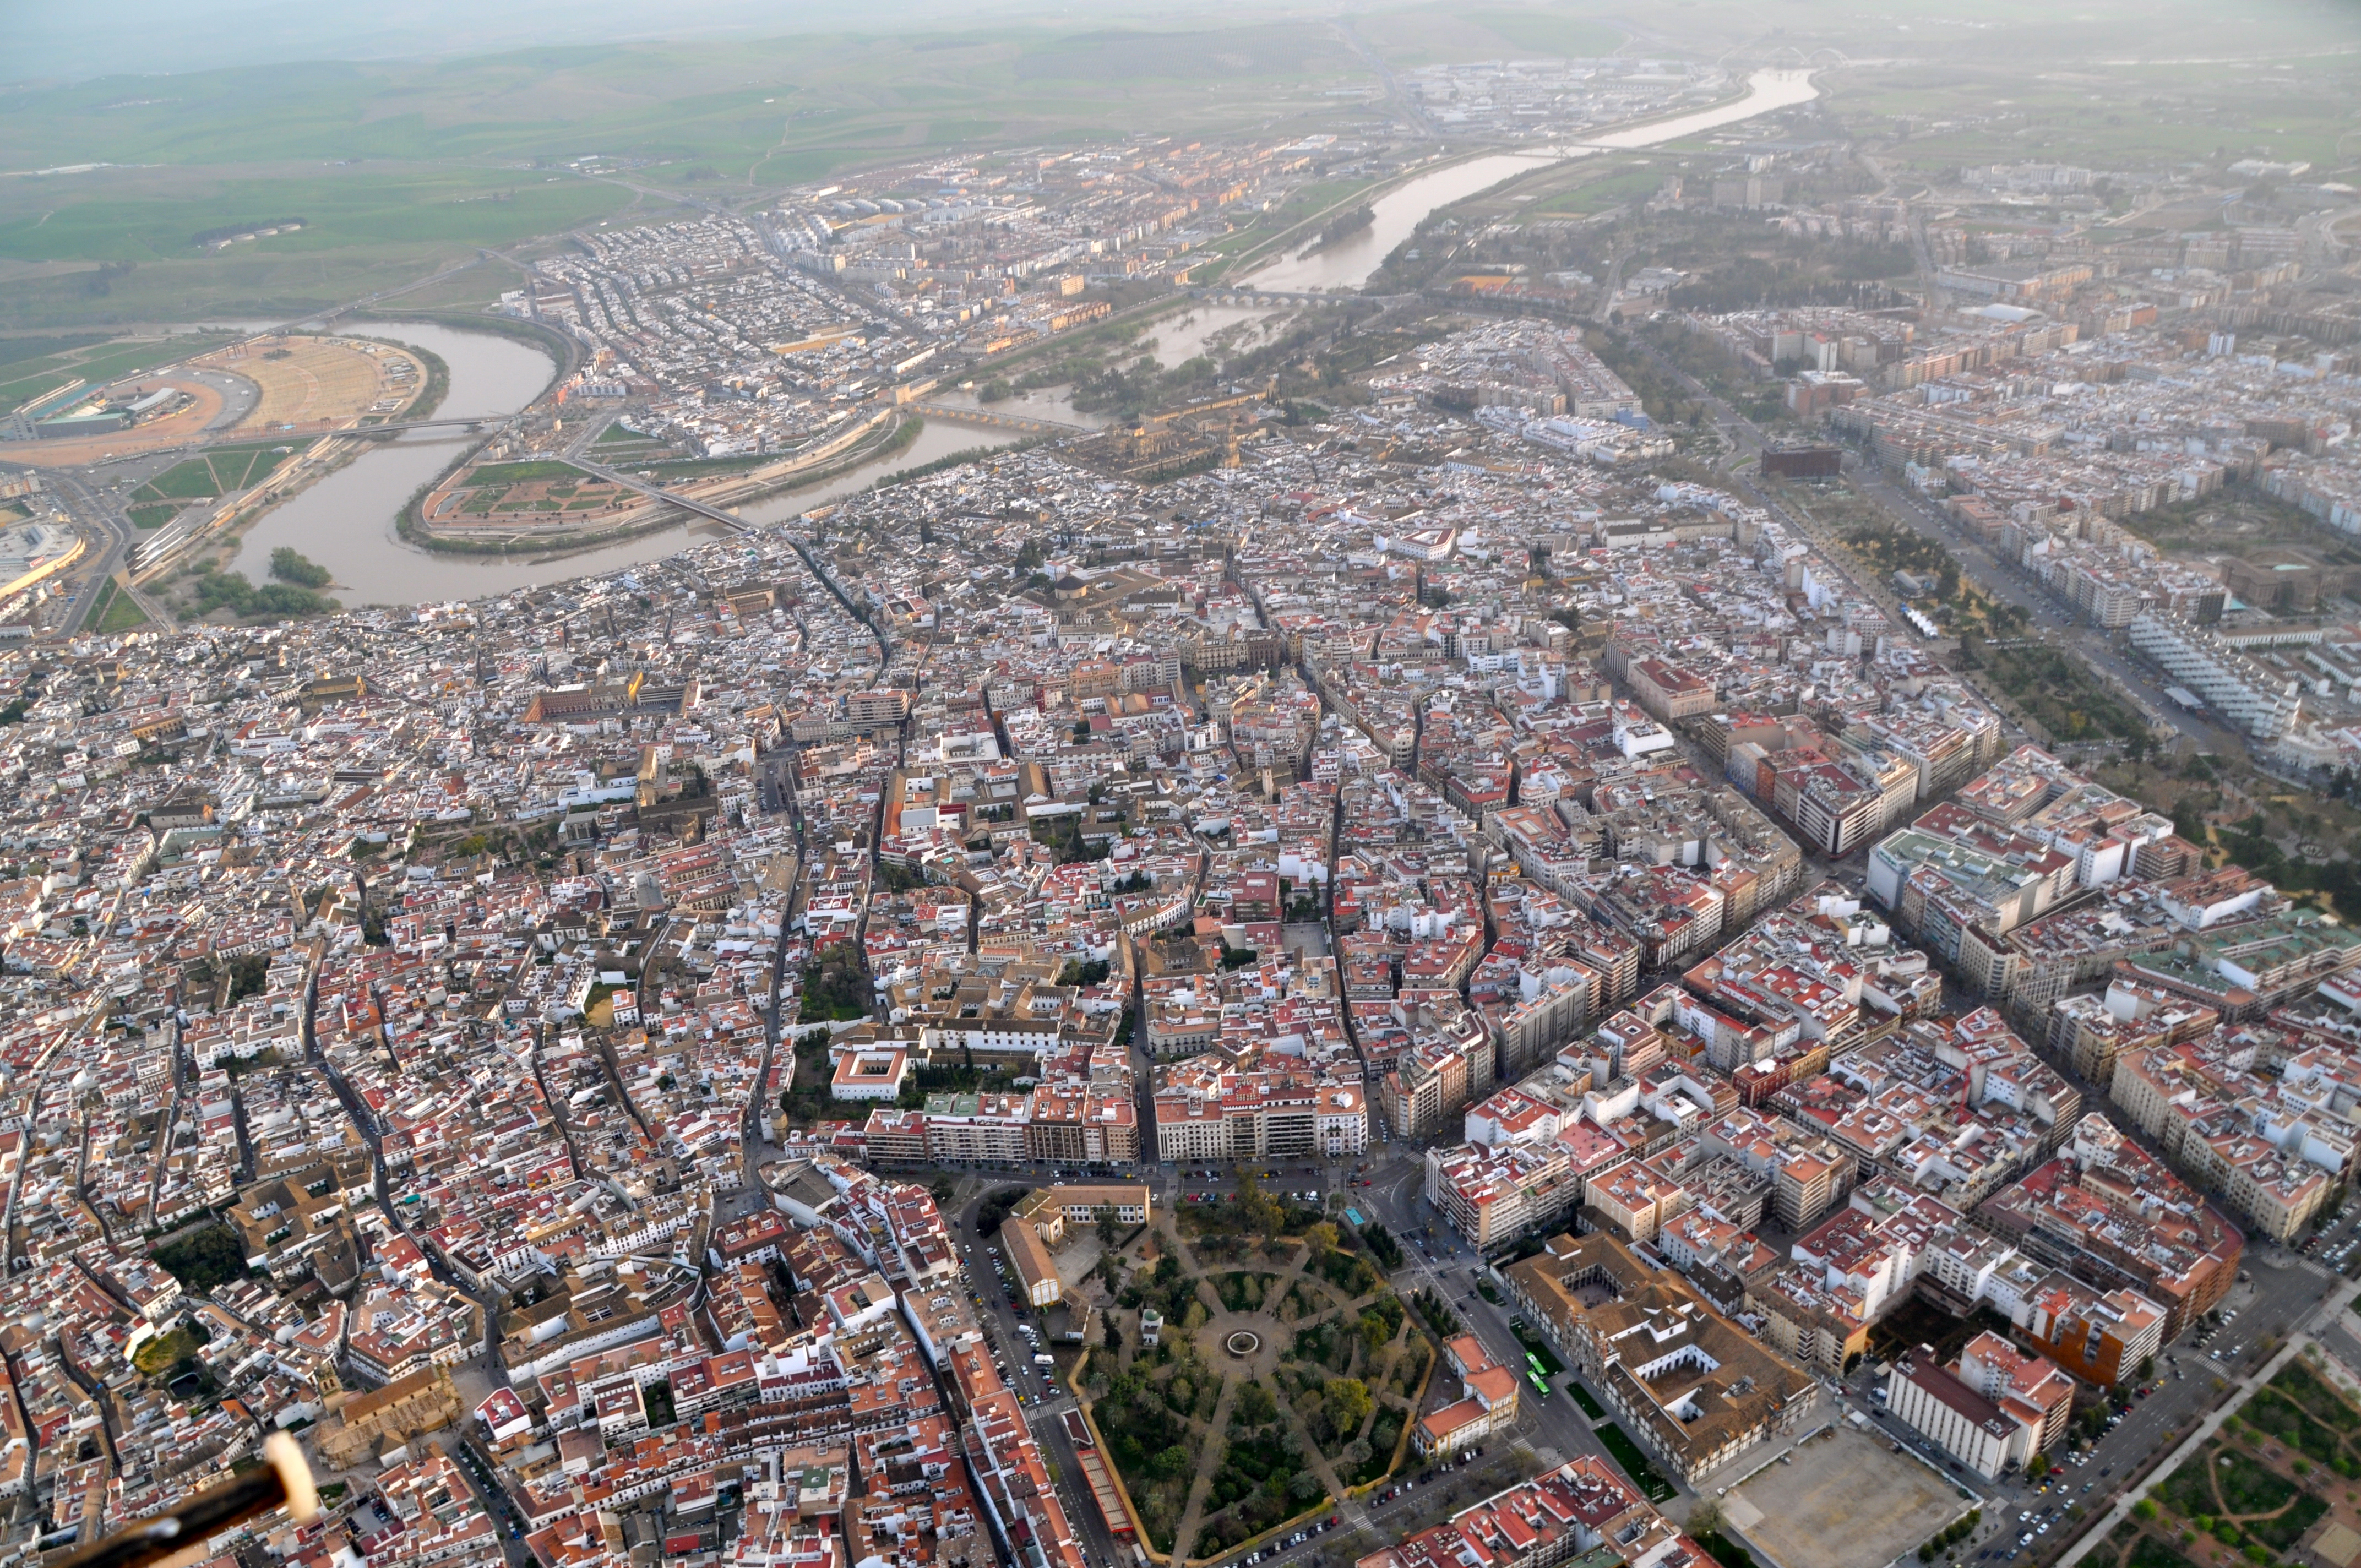 File:Córdoba vista aérea.jpg - Wikimedia Commons